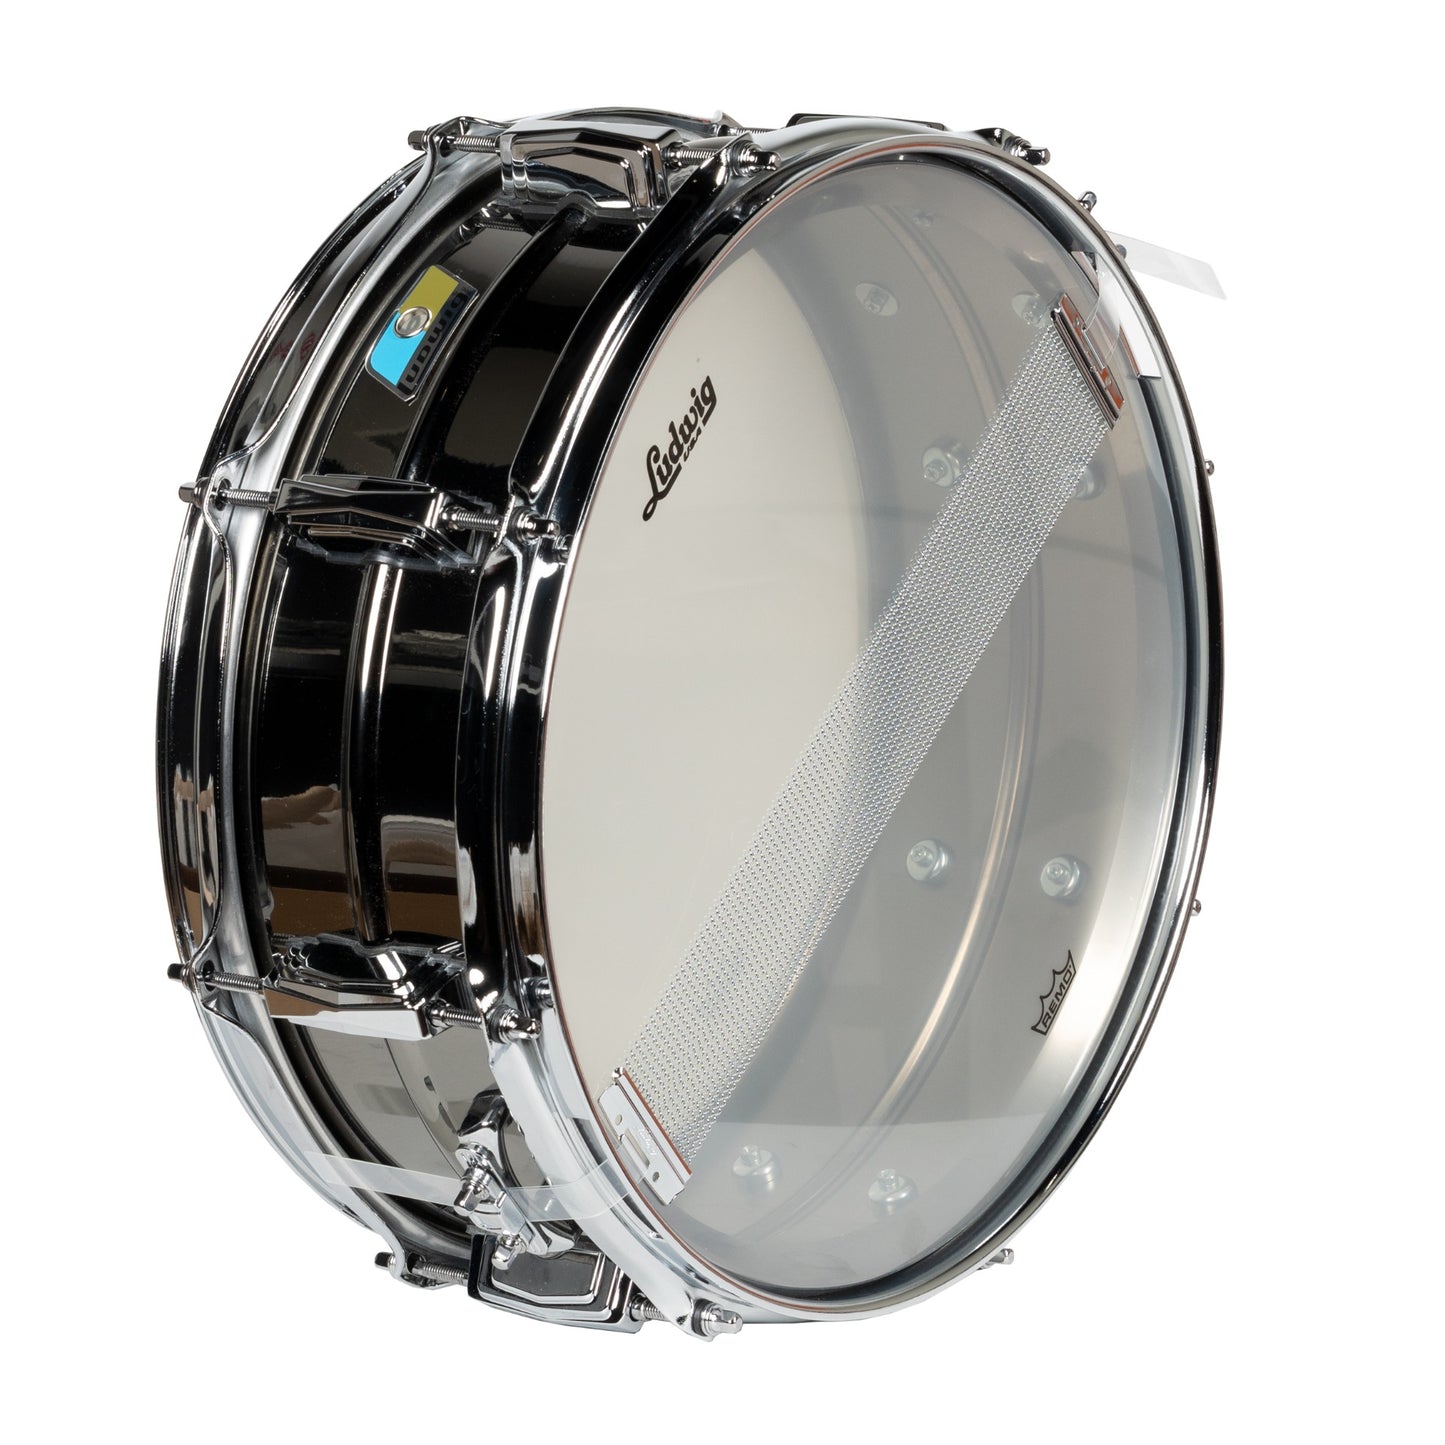 Ludwig LB414 Black Beauty 5x14 Snare Drum - B Stock -